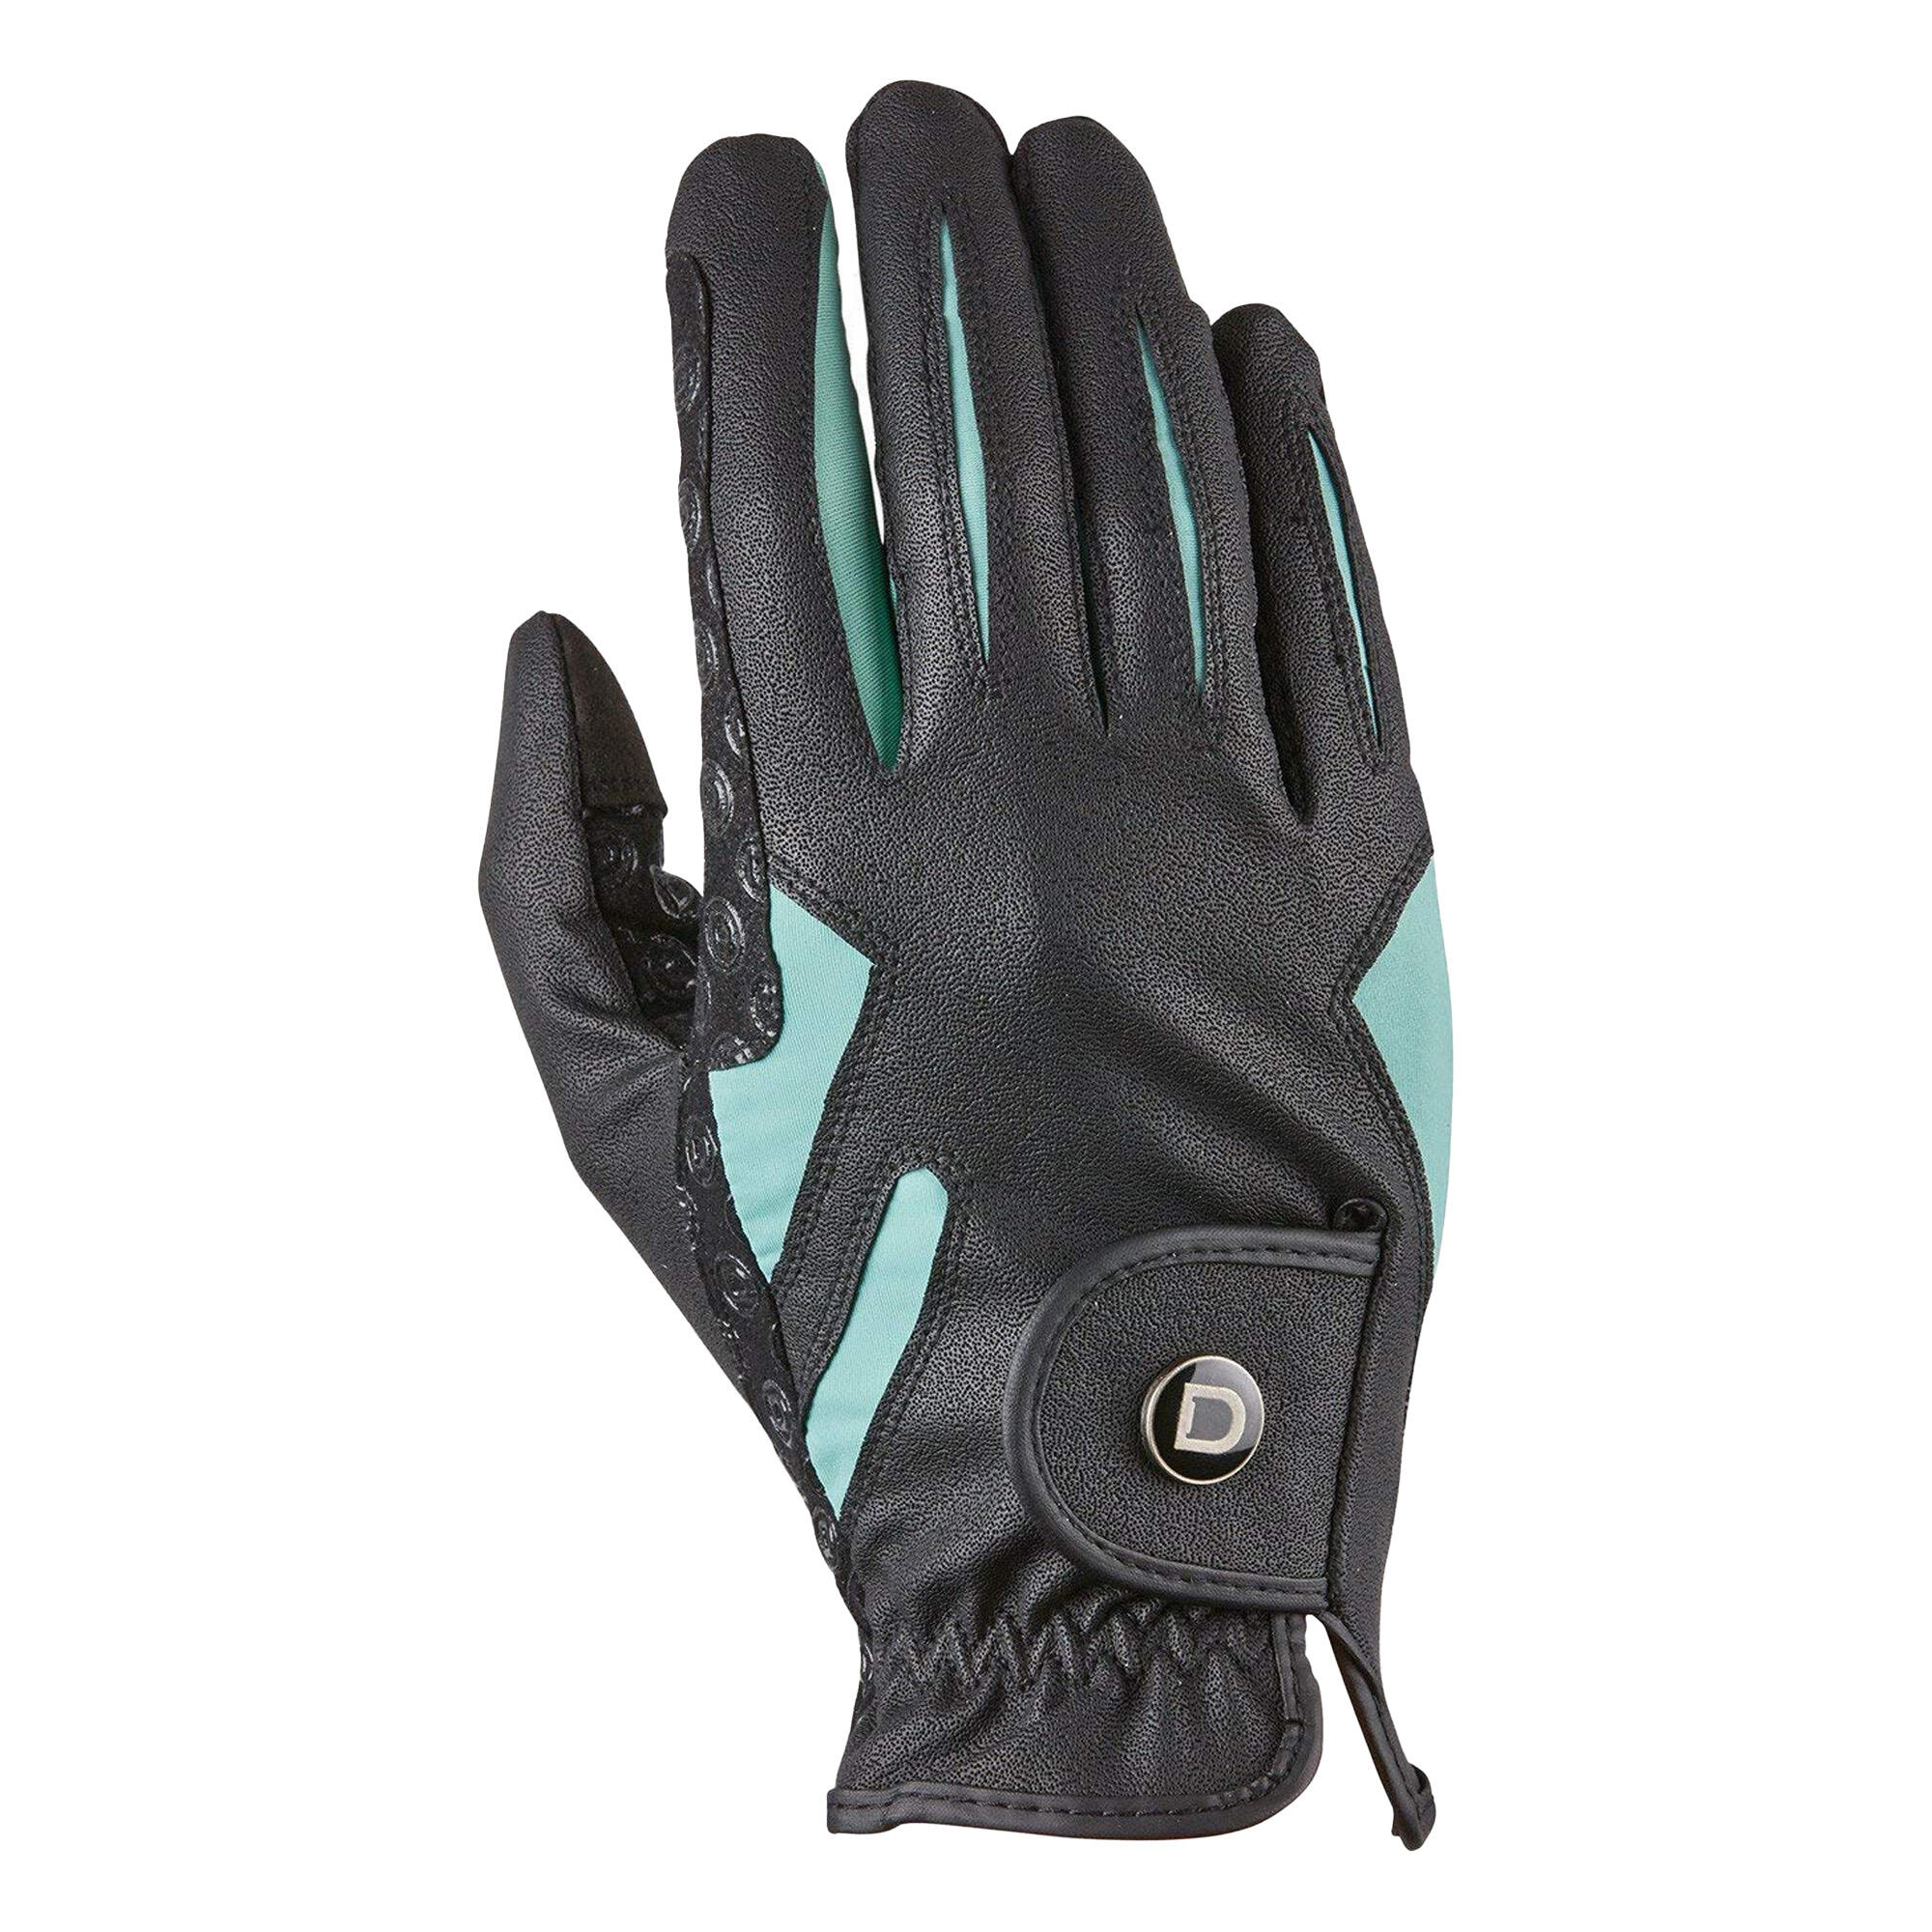 Unisex Coolit Gel Touch Fastening Riding Gloves (Black/Teal) 1/4